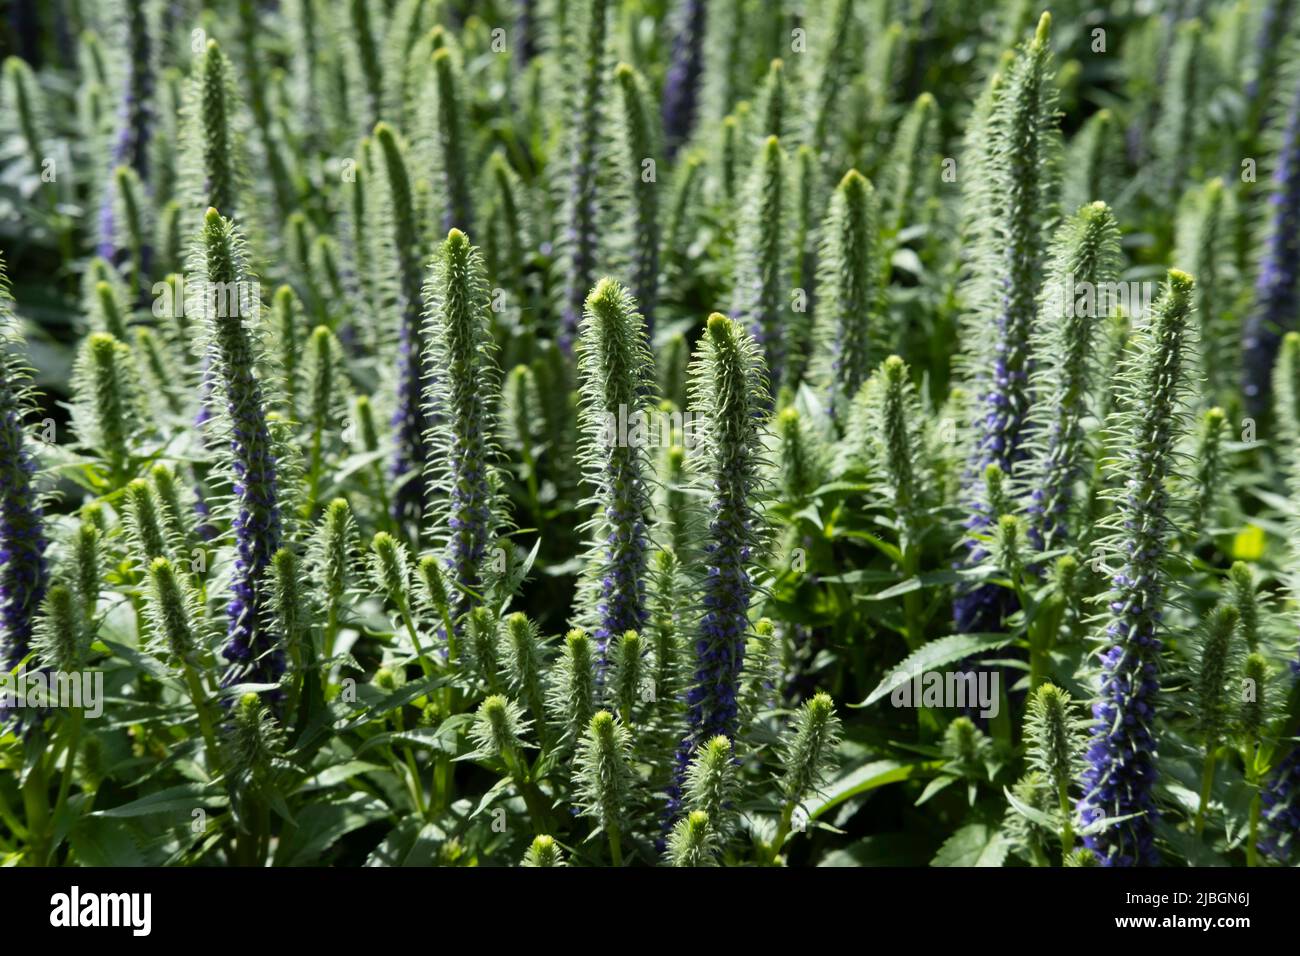 Flowering Veronica or Spiky Speedwell in a Summer Garden Stock Photo